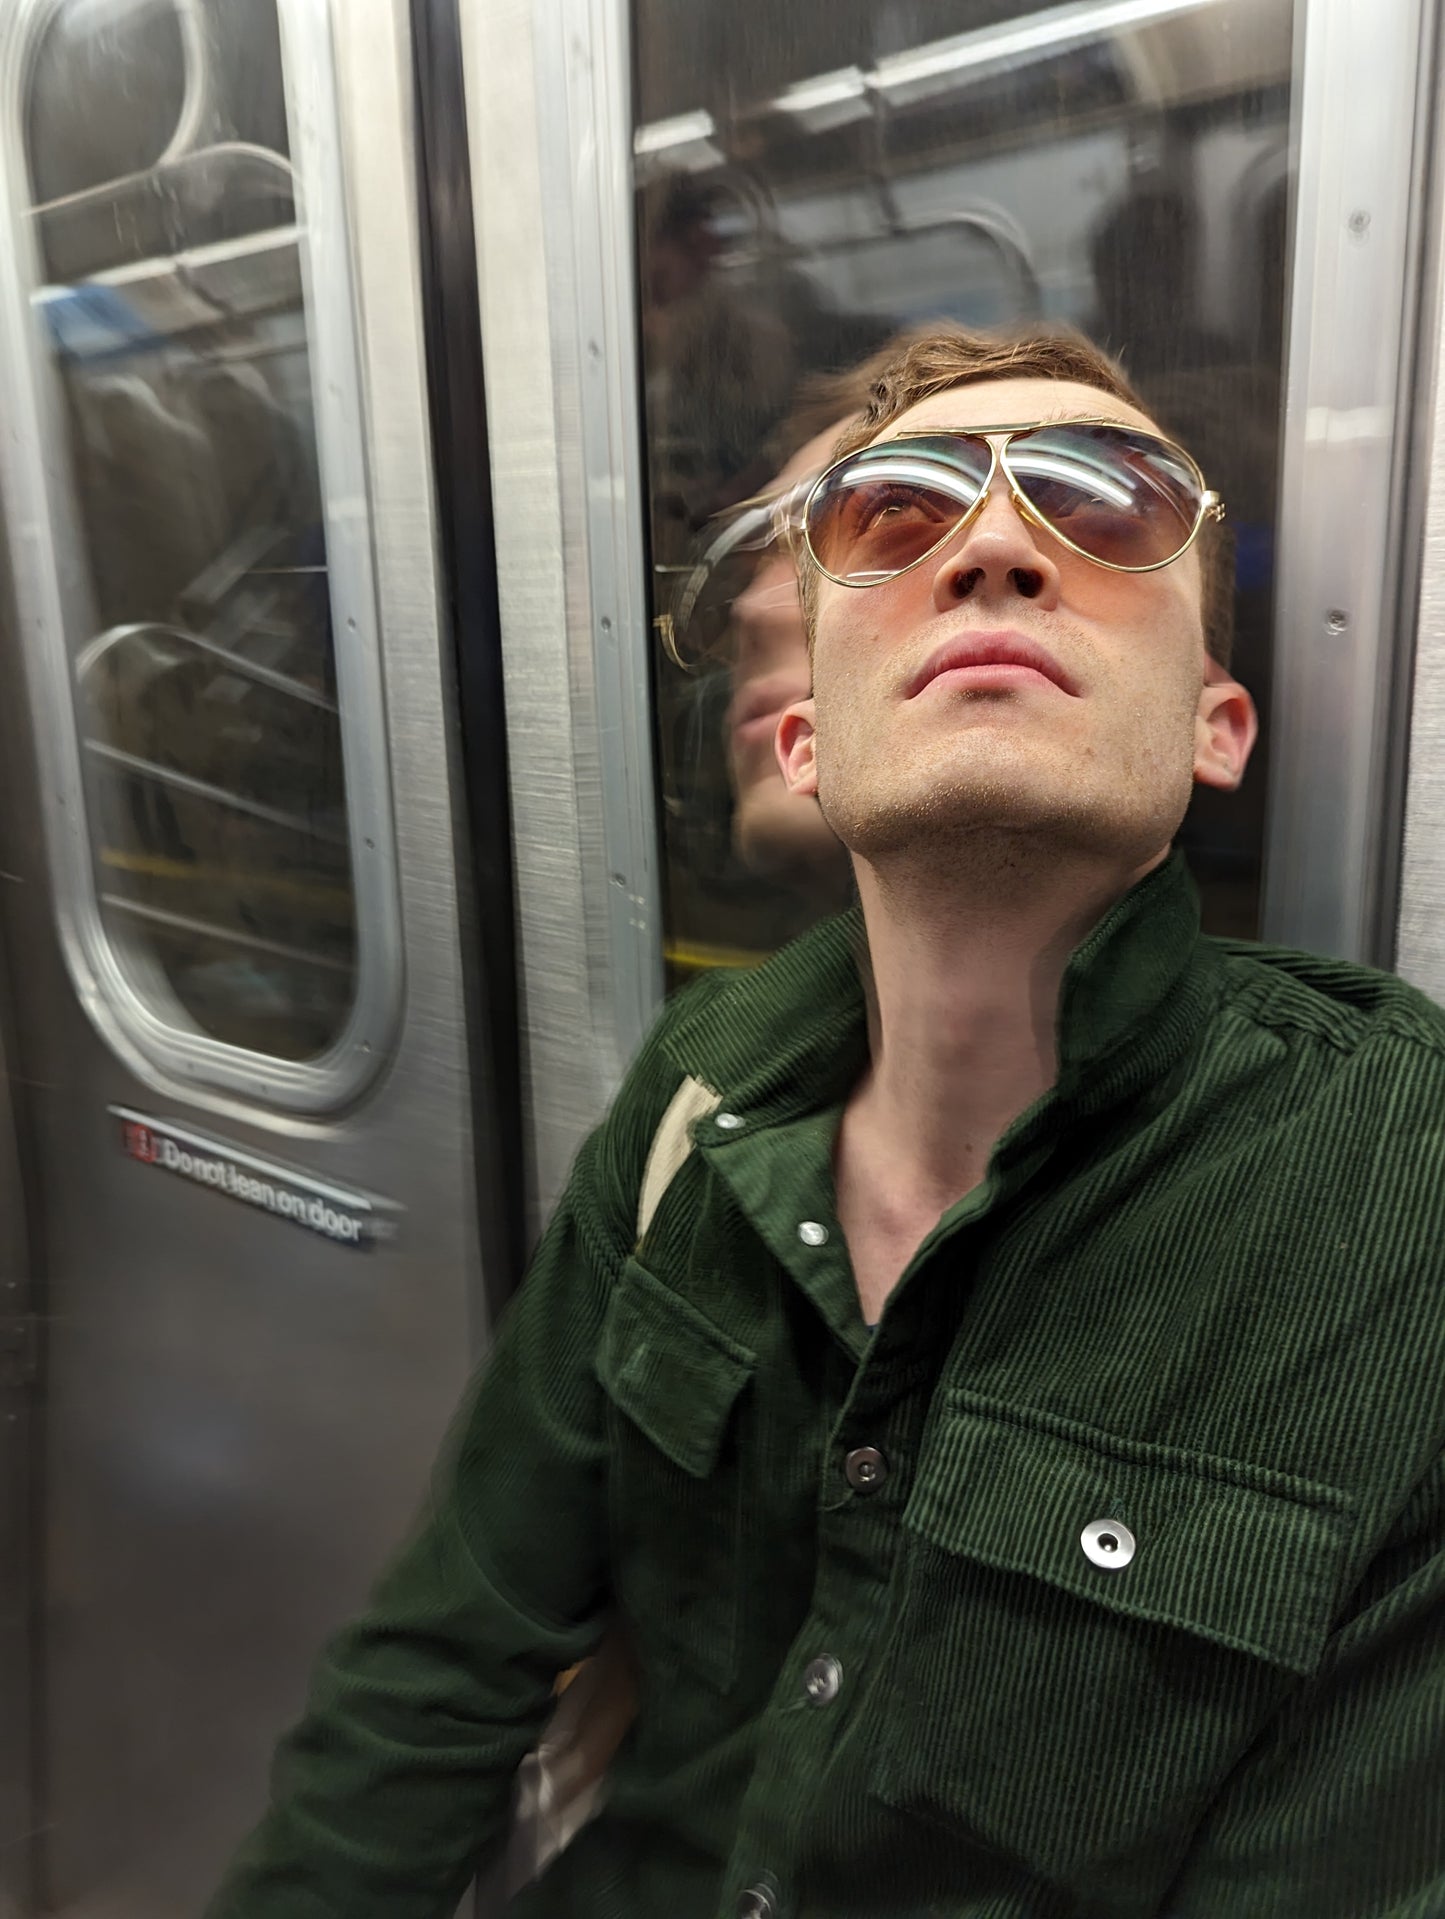 Subwaygram Portrait Experience